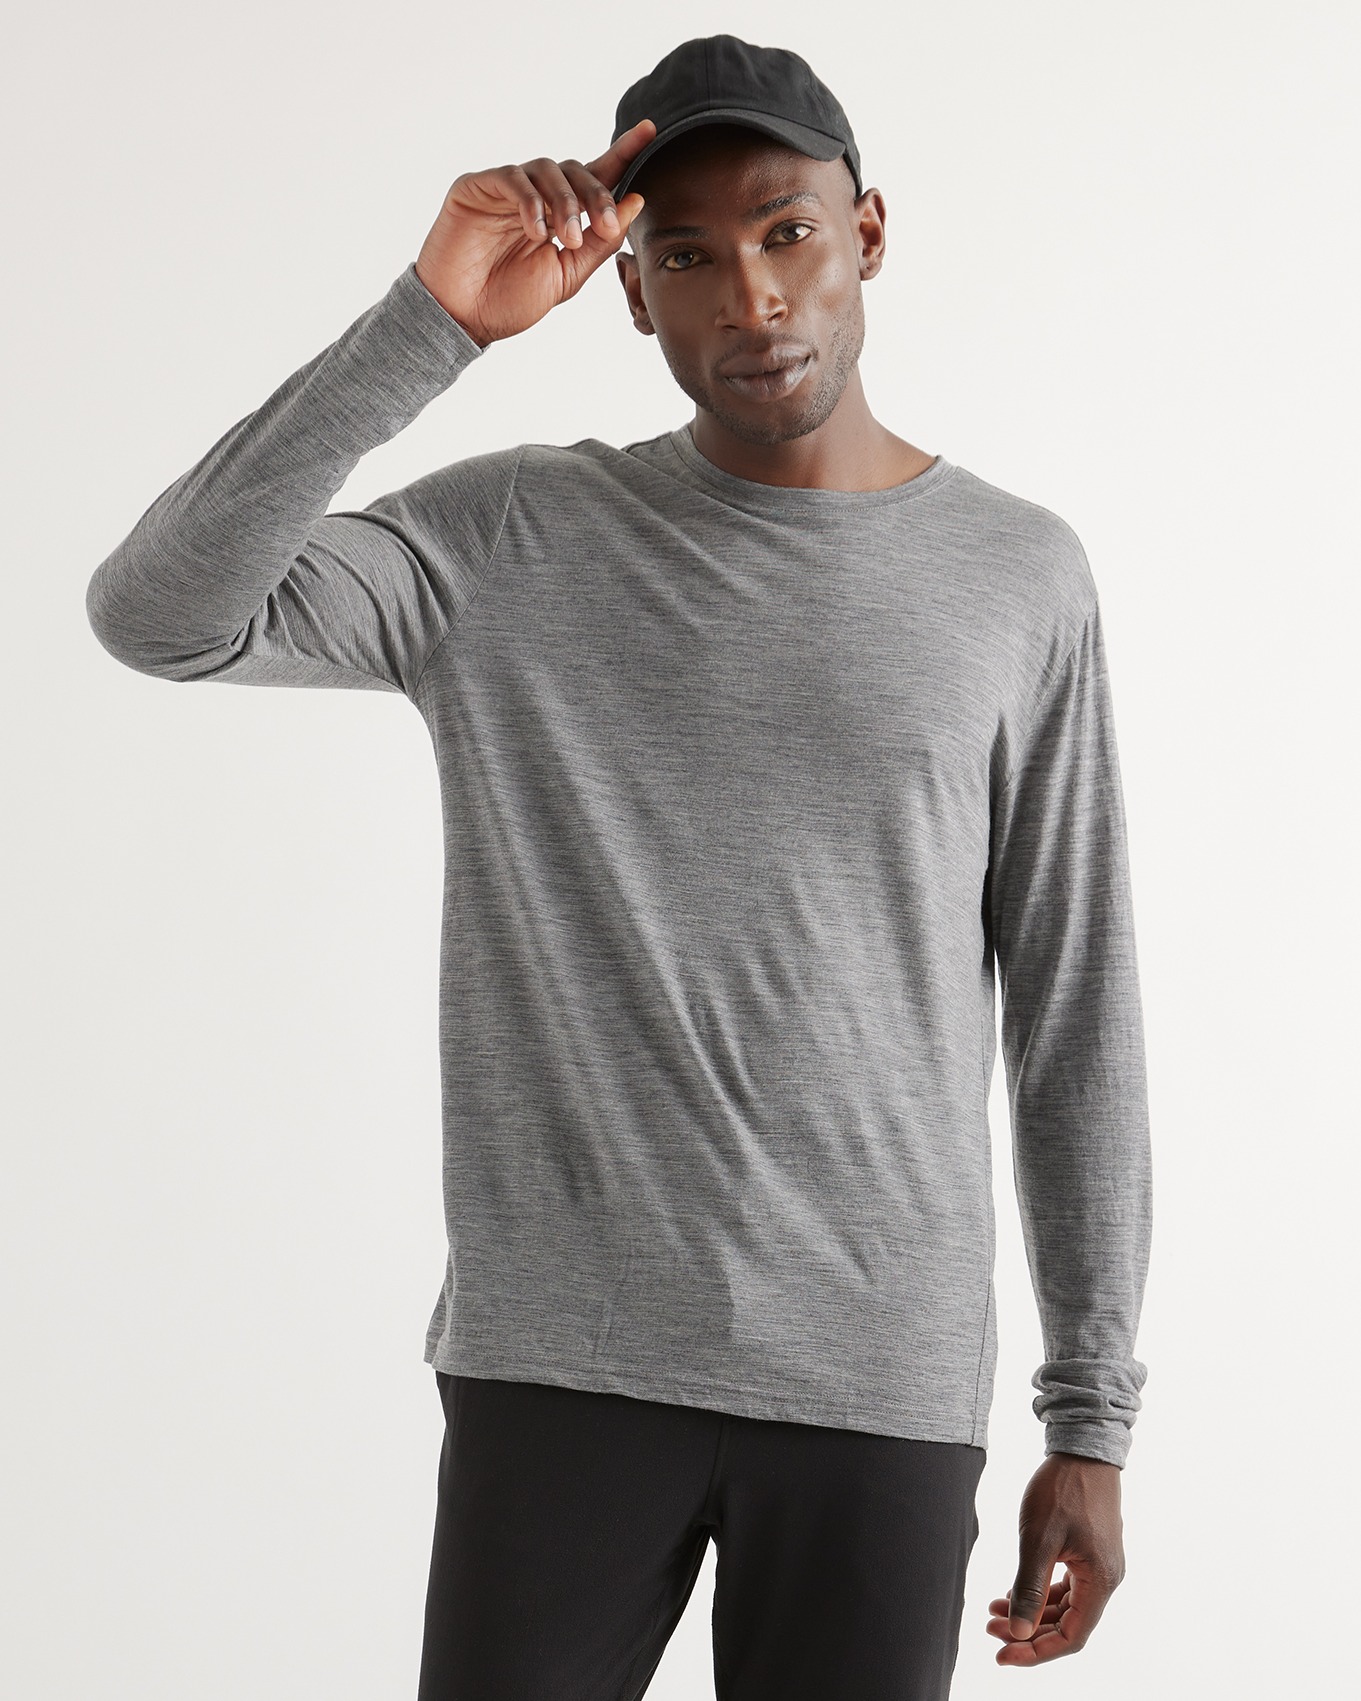 Quince Men's 100% Merino Wool All-season Long Sleeve Base Layer T-shirt In Heather Grey